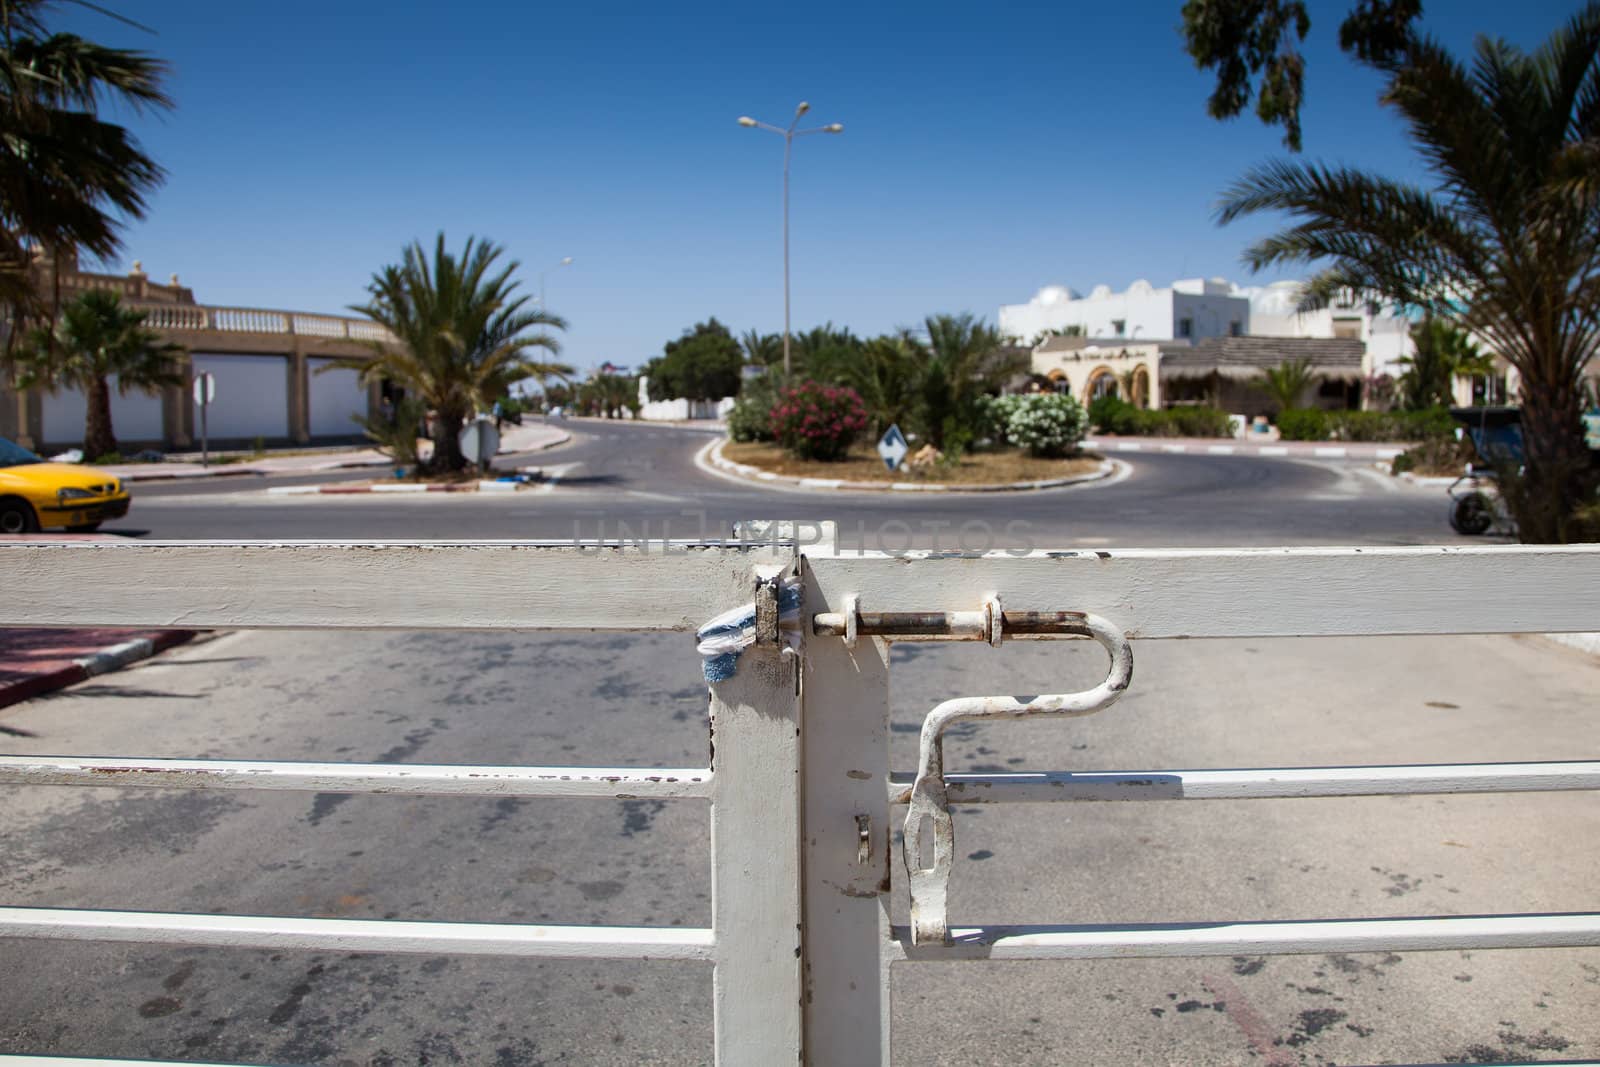 Gate detail in Djerba Tunisia - Hotel entrance